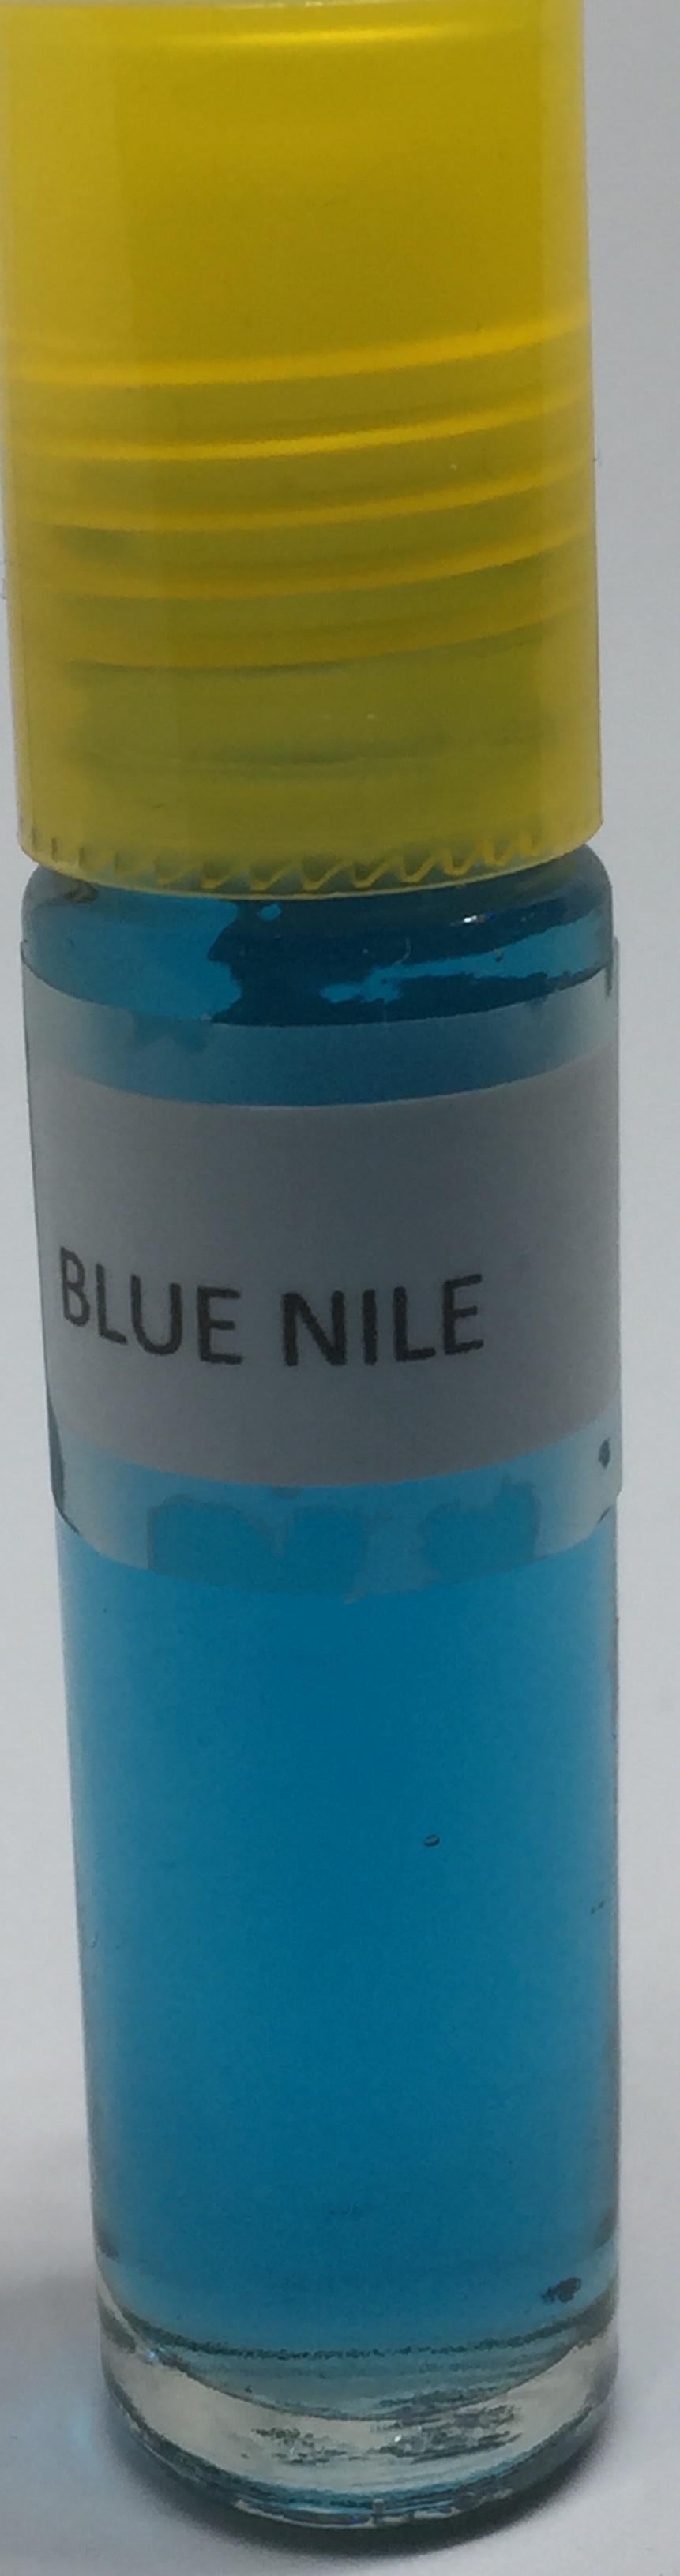 Blue Nile: Fragrance(Perfume)Body Oil Unisex